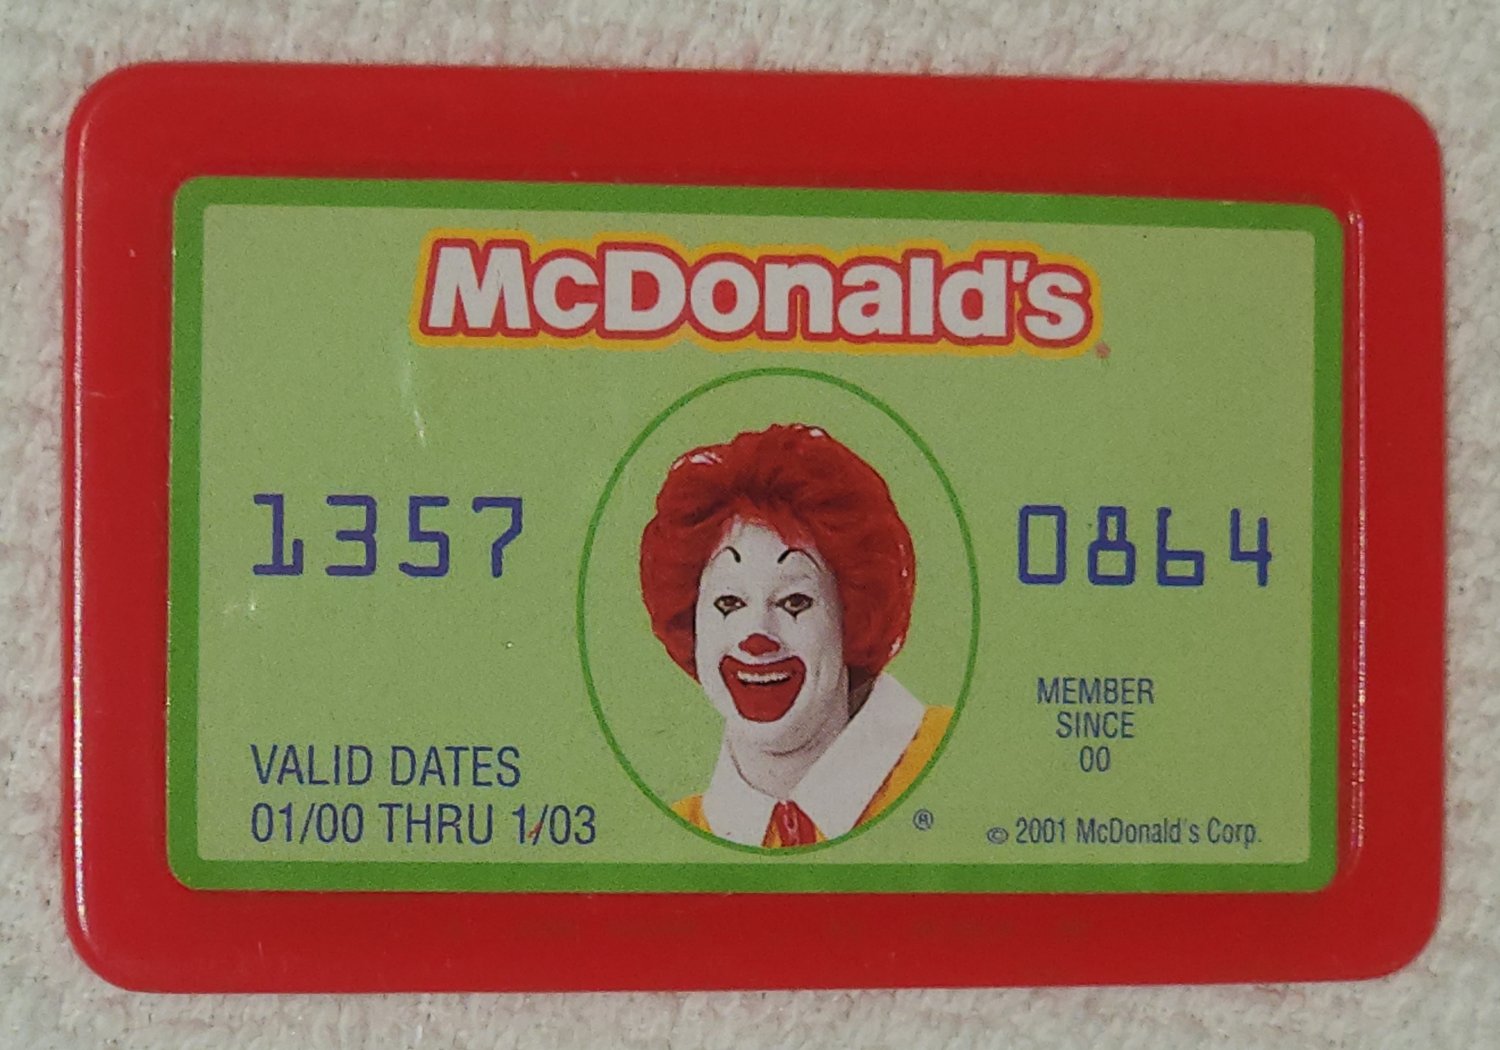 Ronald McDonald Red Plastic Toy Credit Card McDonald's Talking Cash Register 2001 Replacement Part